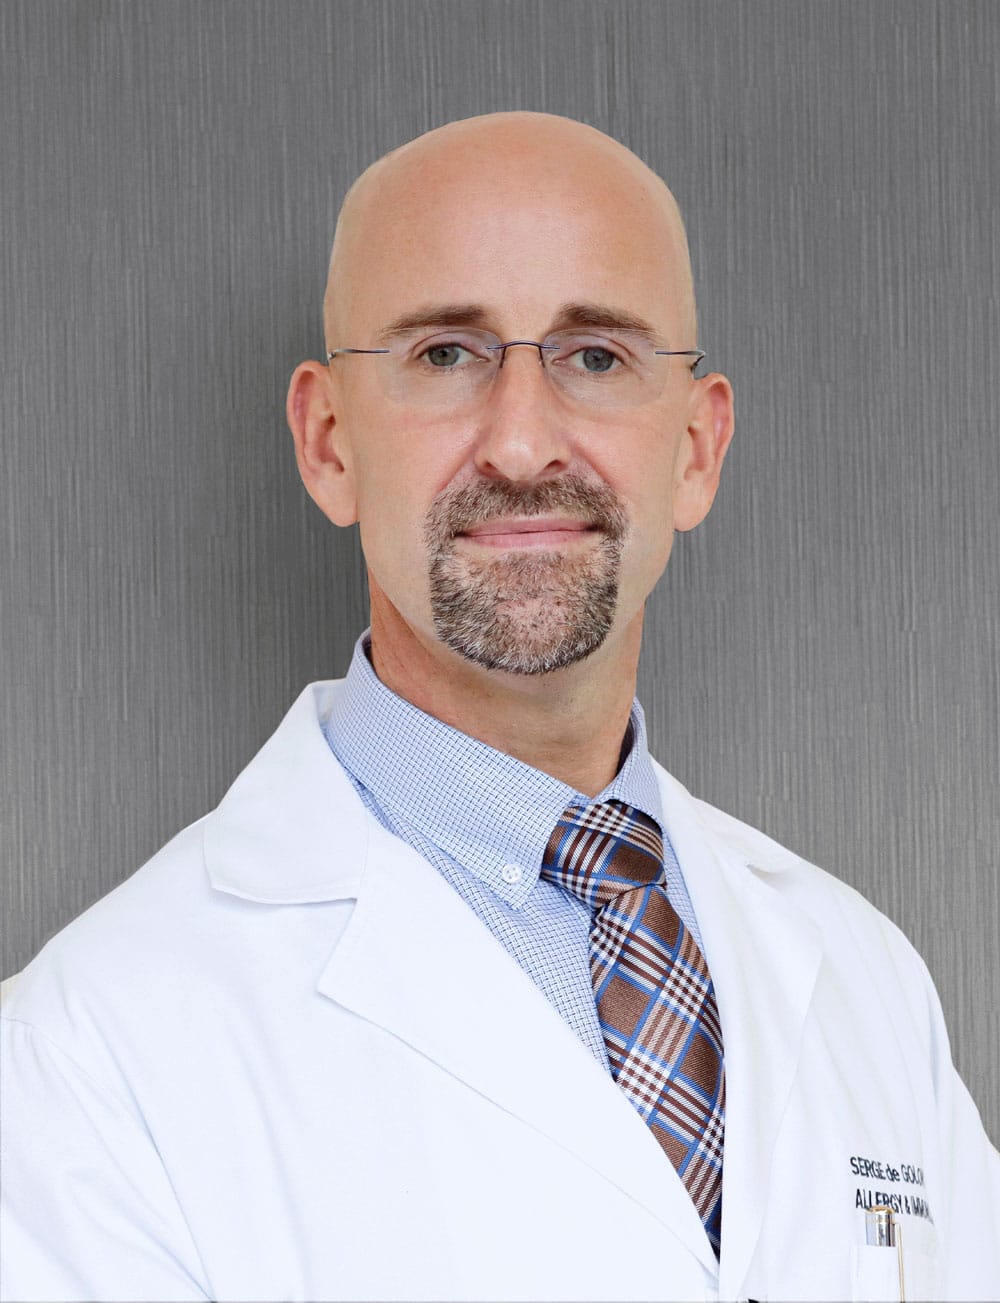 Dr. Serge DeGolovine, Board-Certified Doctor at McGovern Allergy